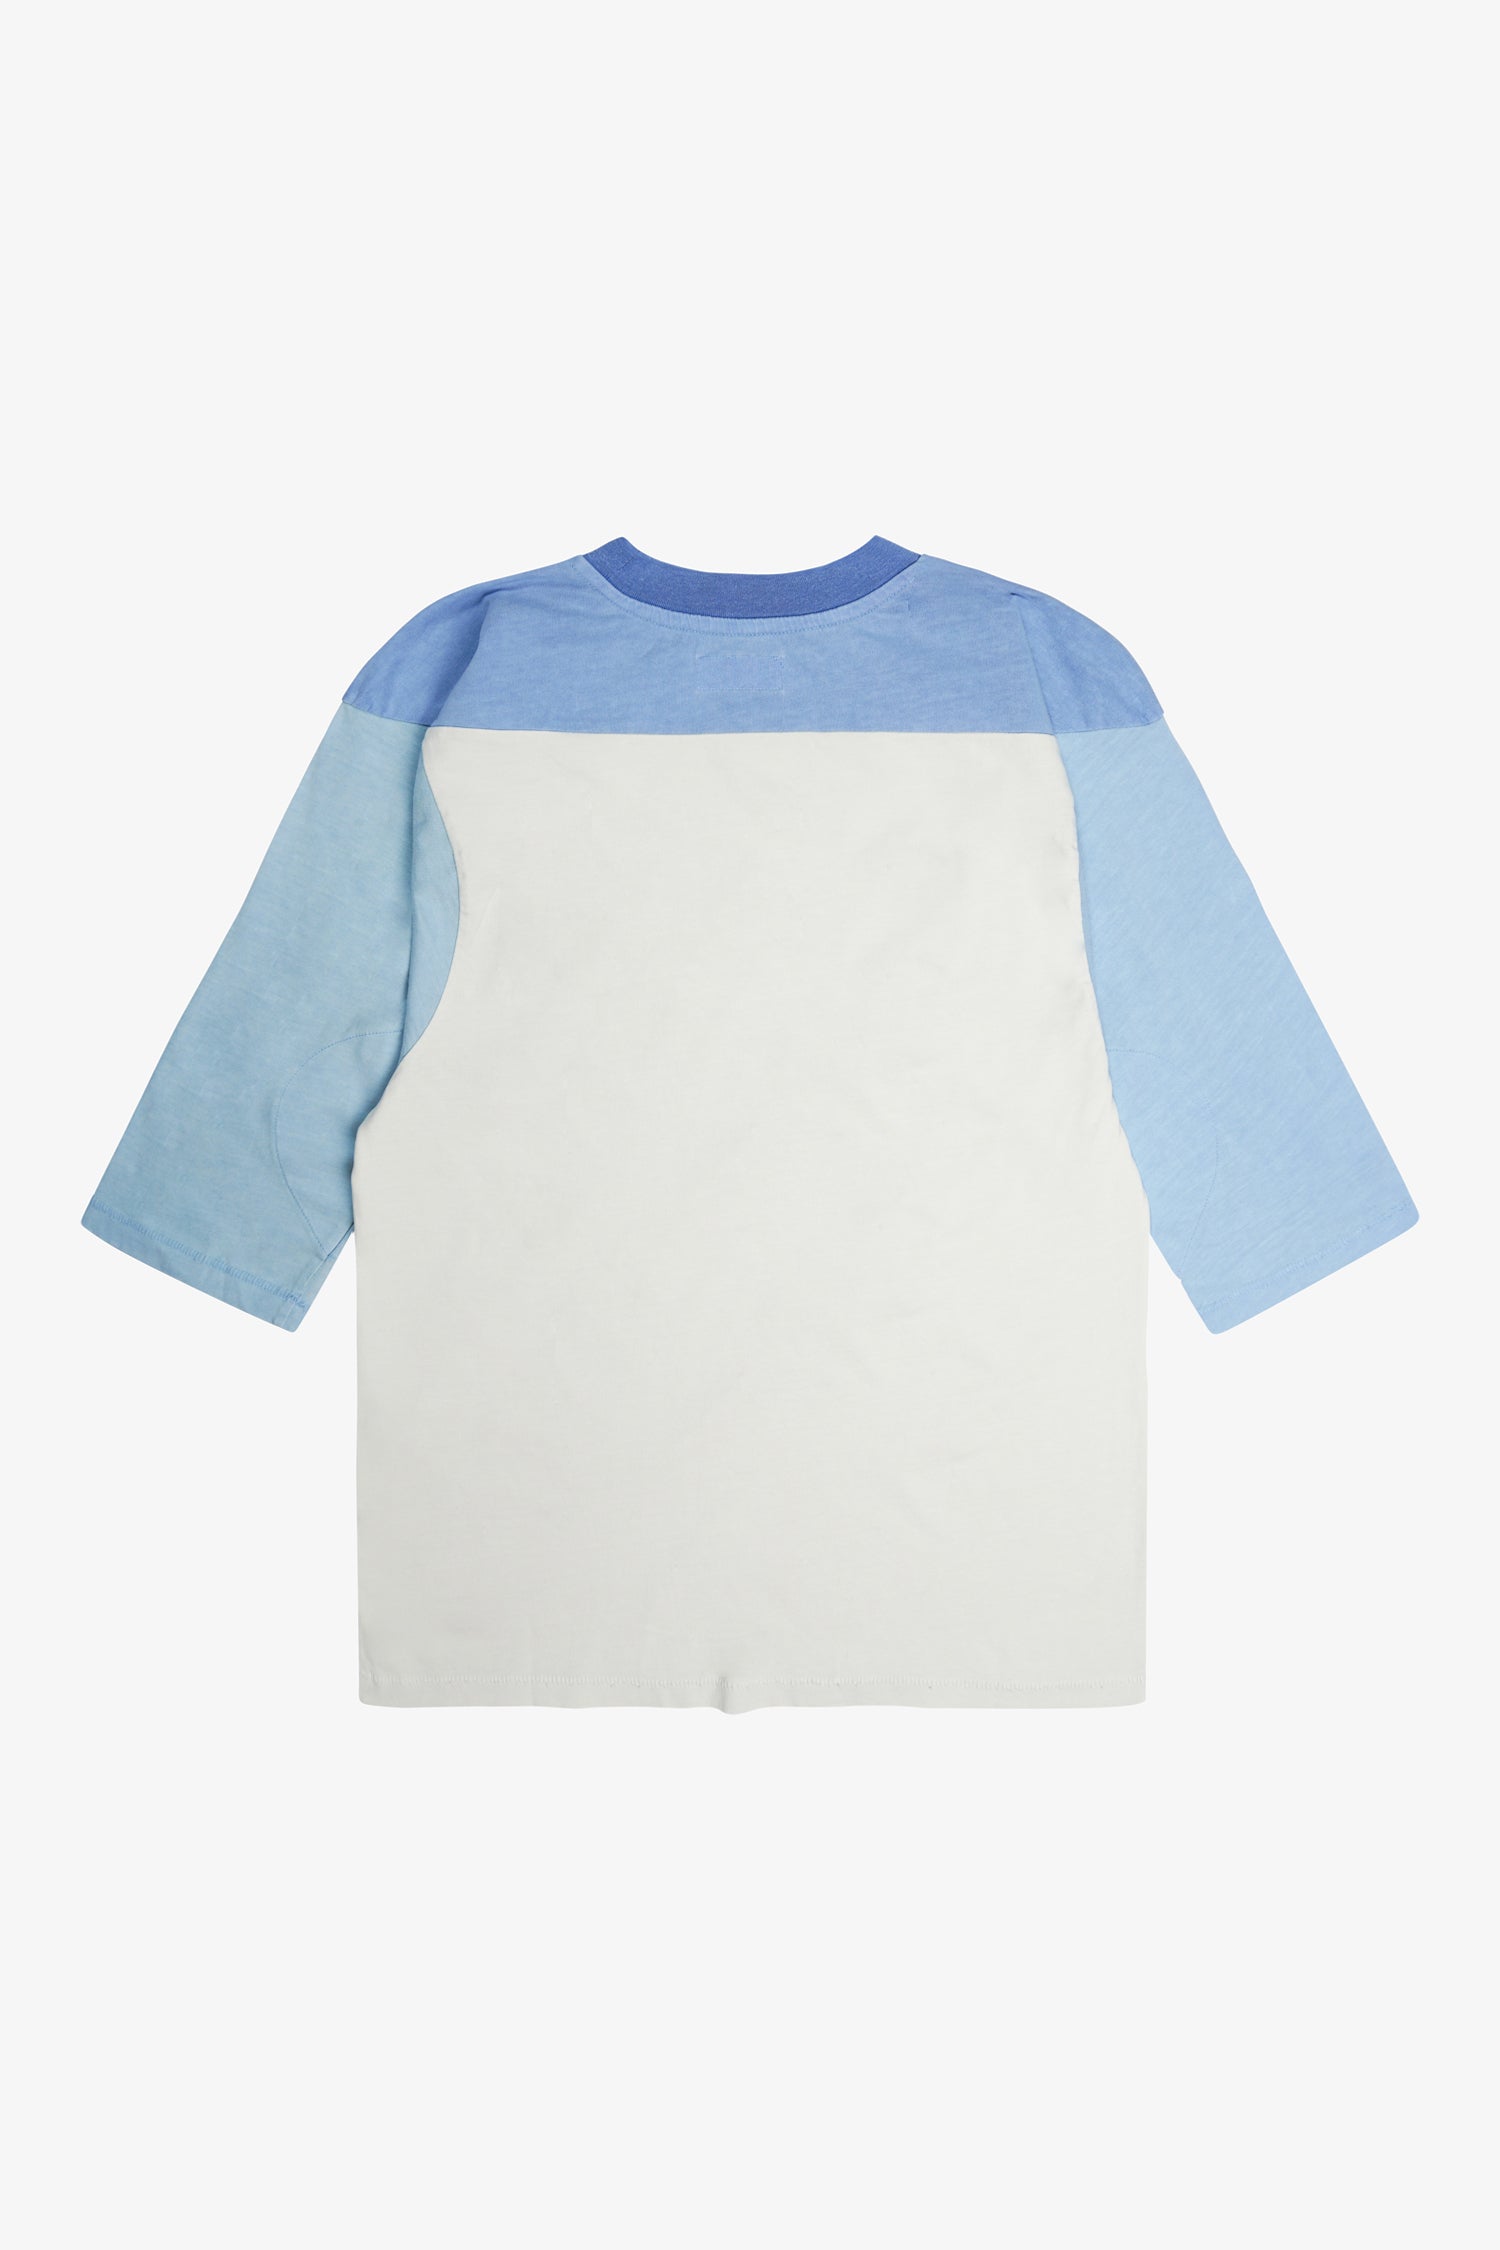 Selectshop FRAME - ERL SUN Football Jersey T-Shirts Dubai